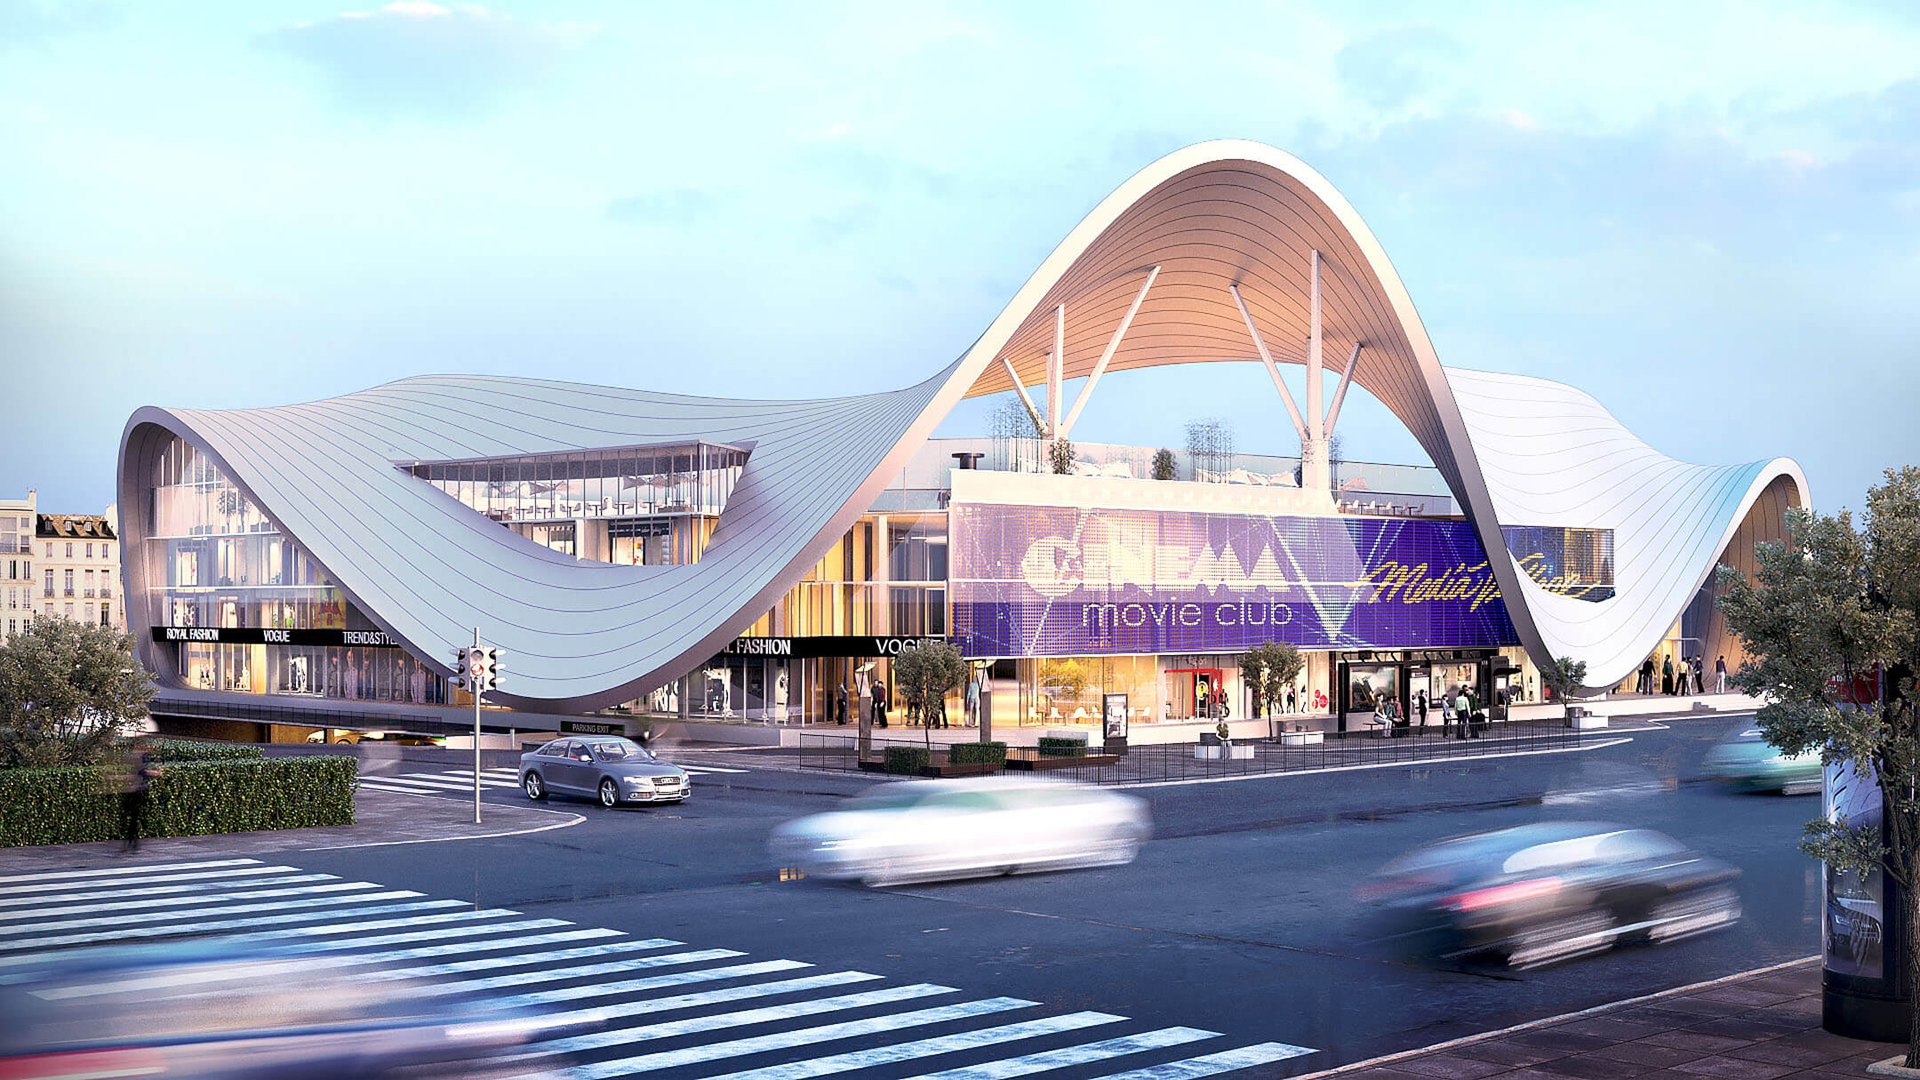 3D Visualization of an Urban Mall